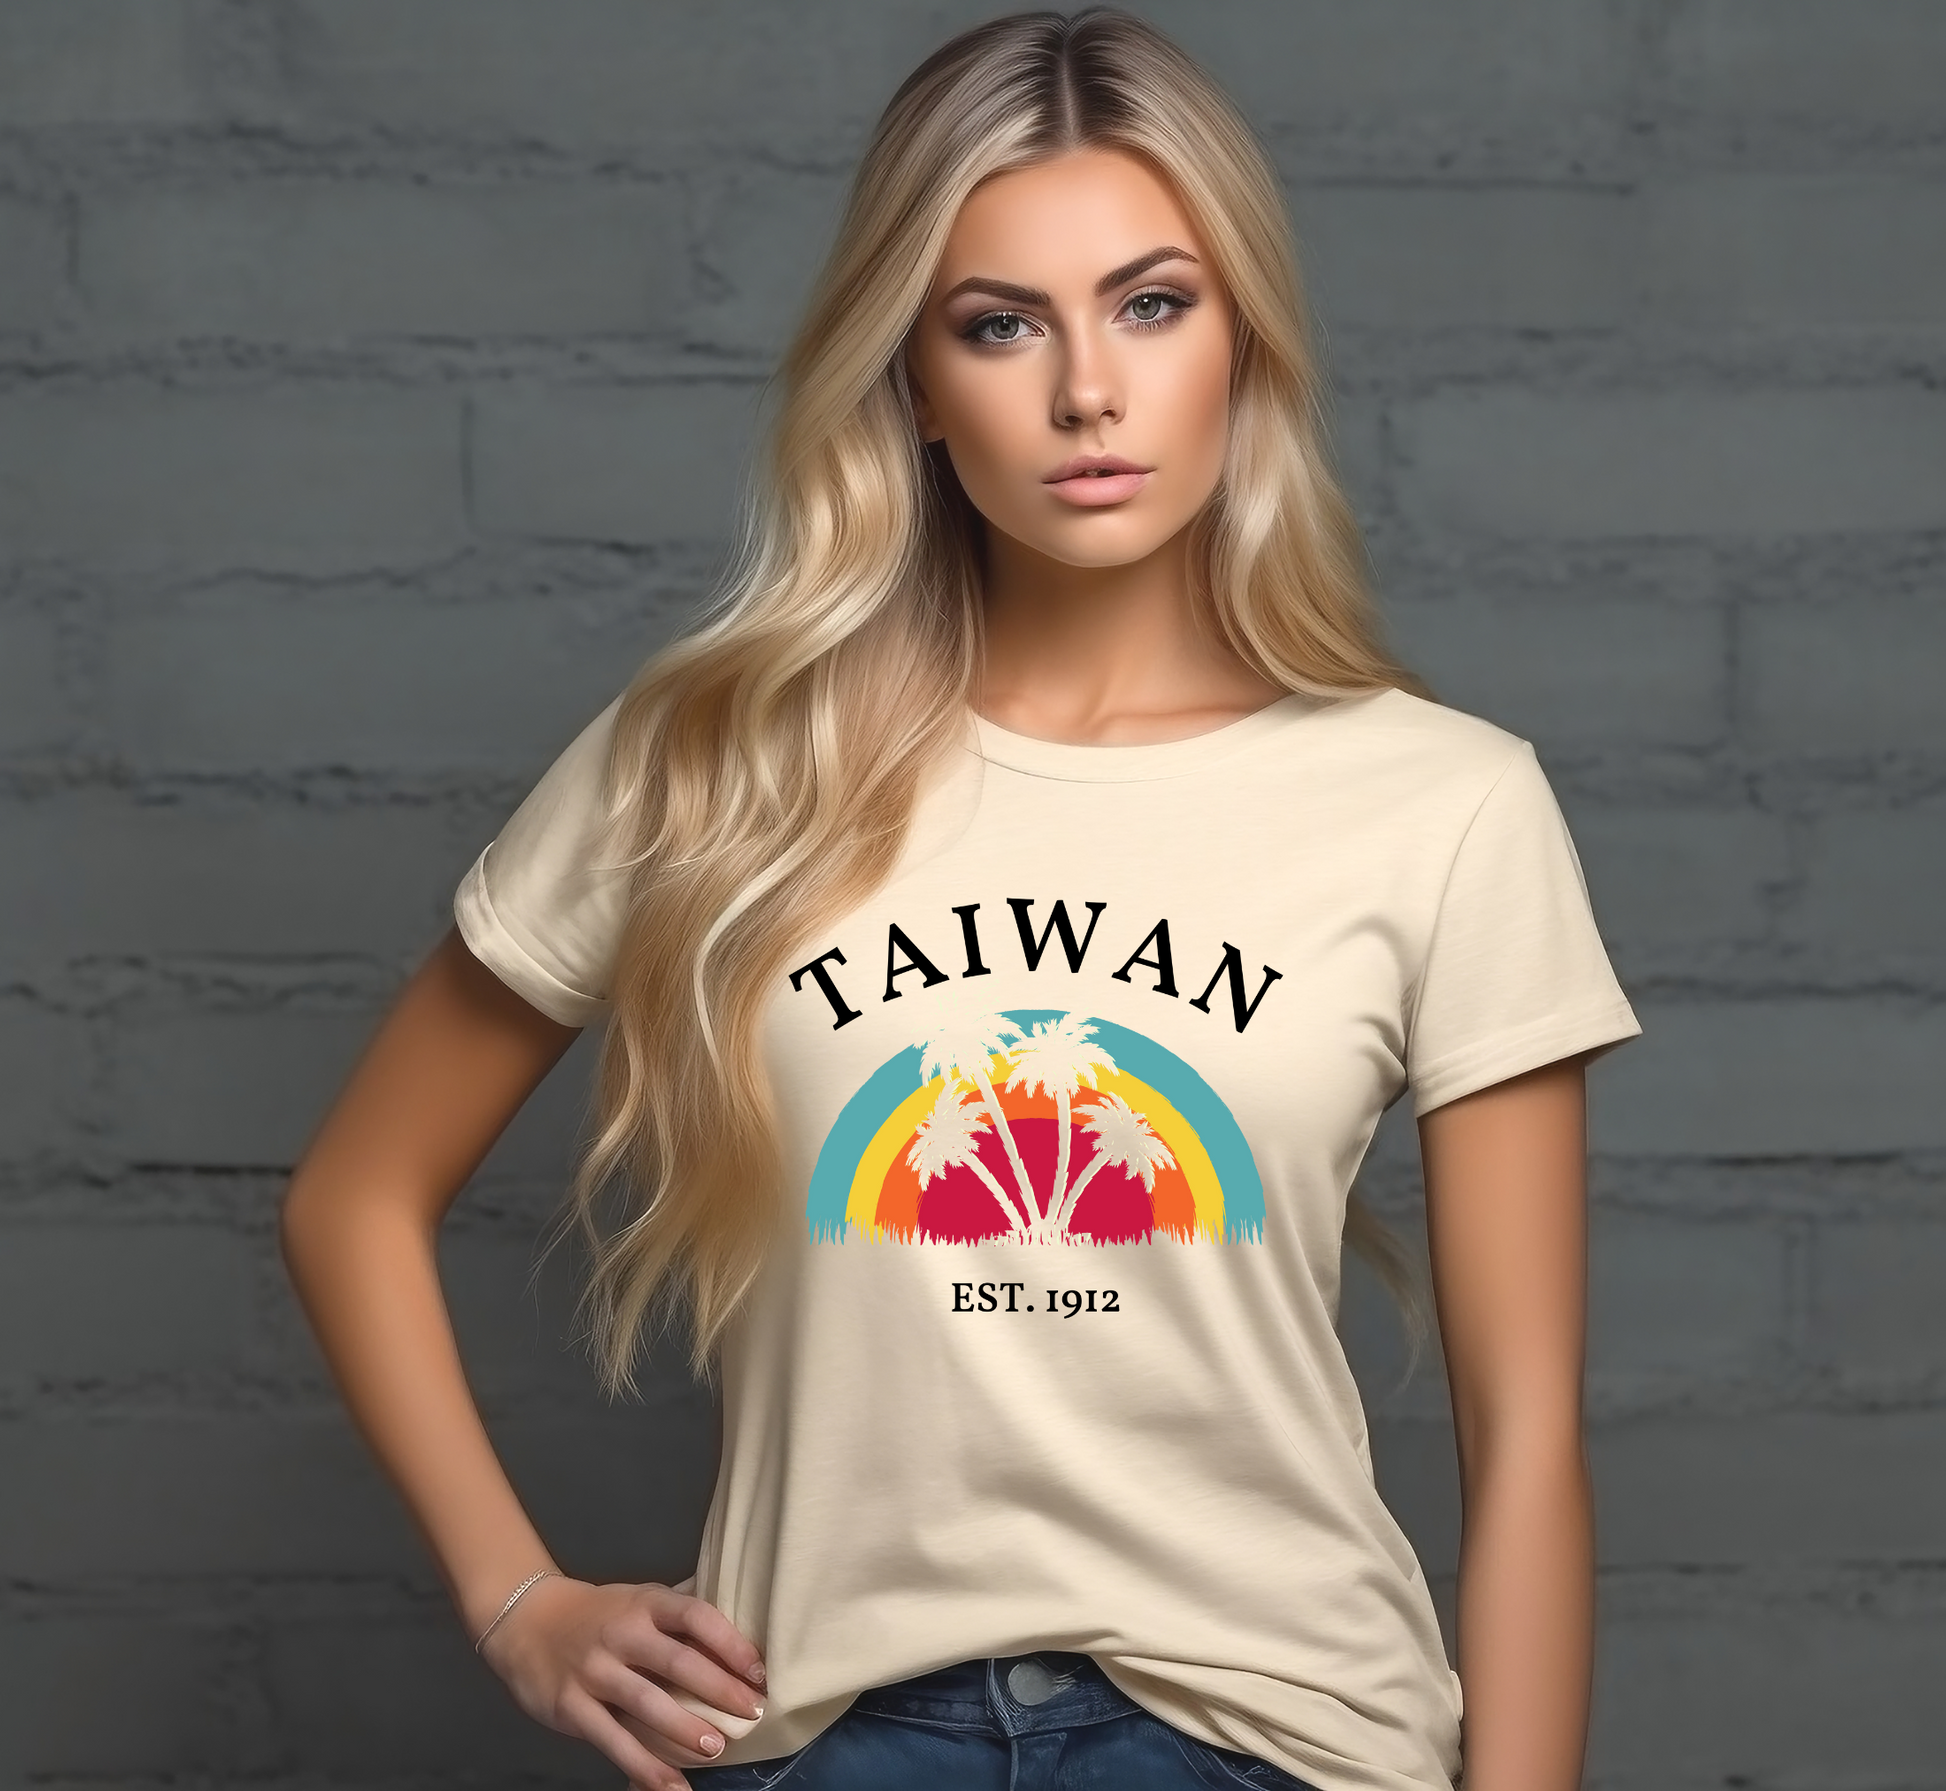 Taiwan summer trip shirt, Taiwan t-shirt